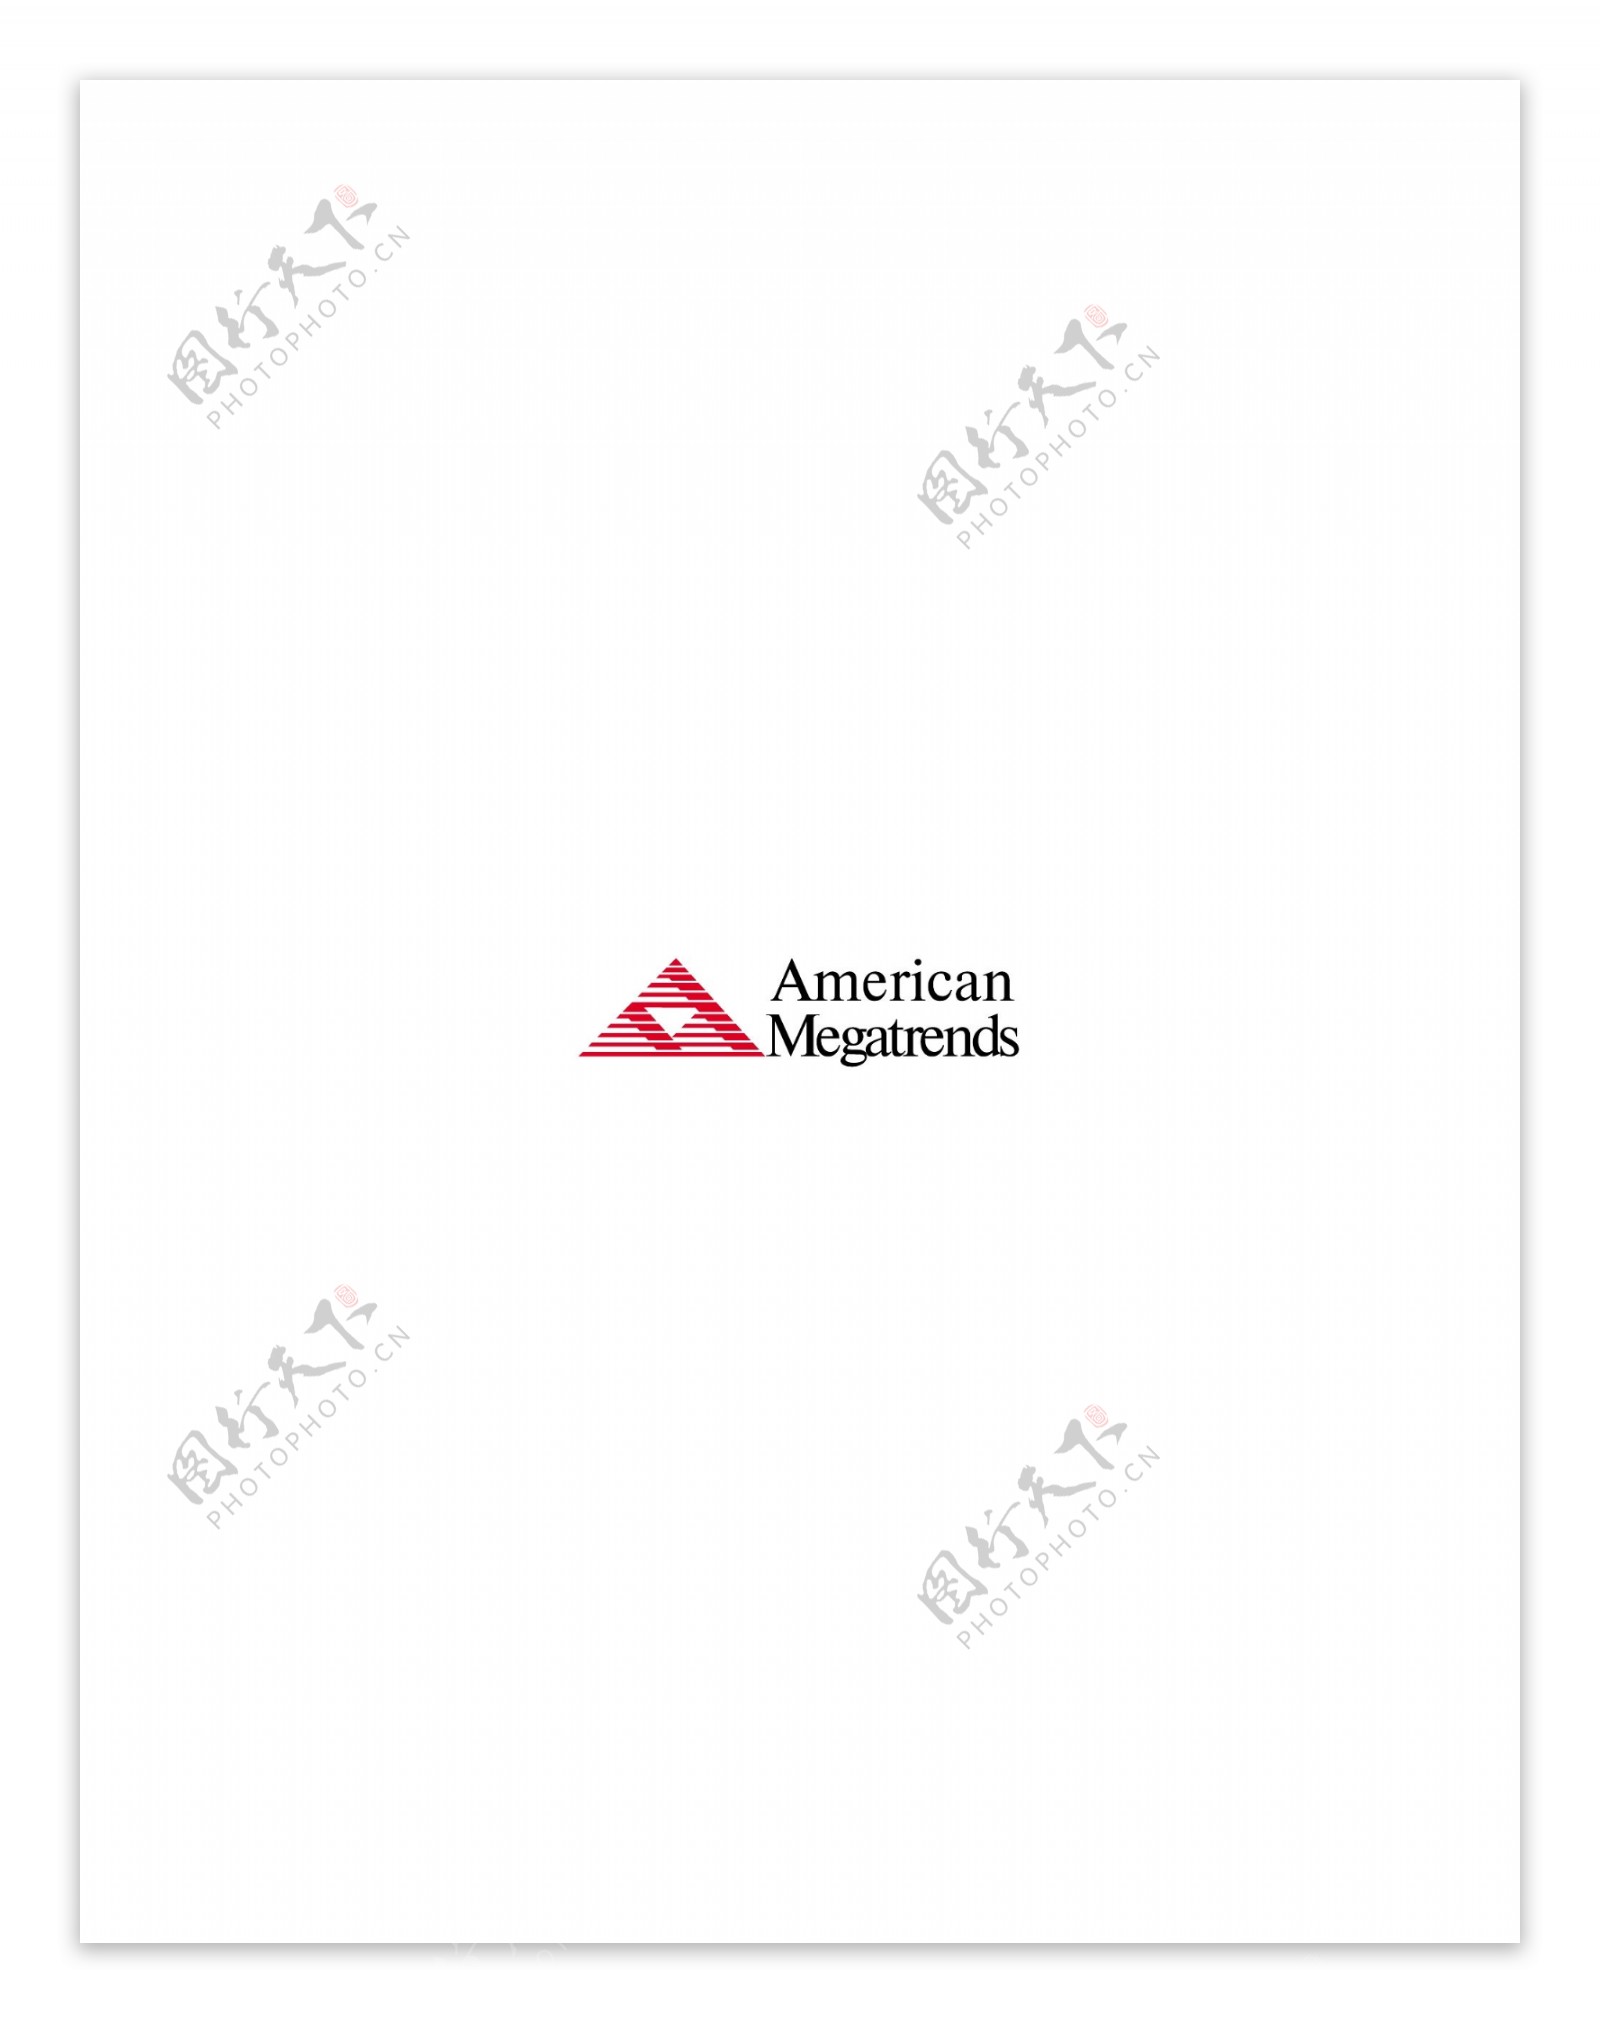 AmericanMegatrendslogo设计欣赏IT高科技公司标志AmericanMegatrends下载标志设计欣赏